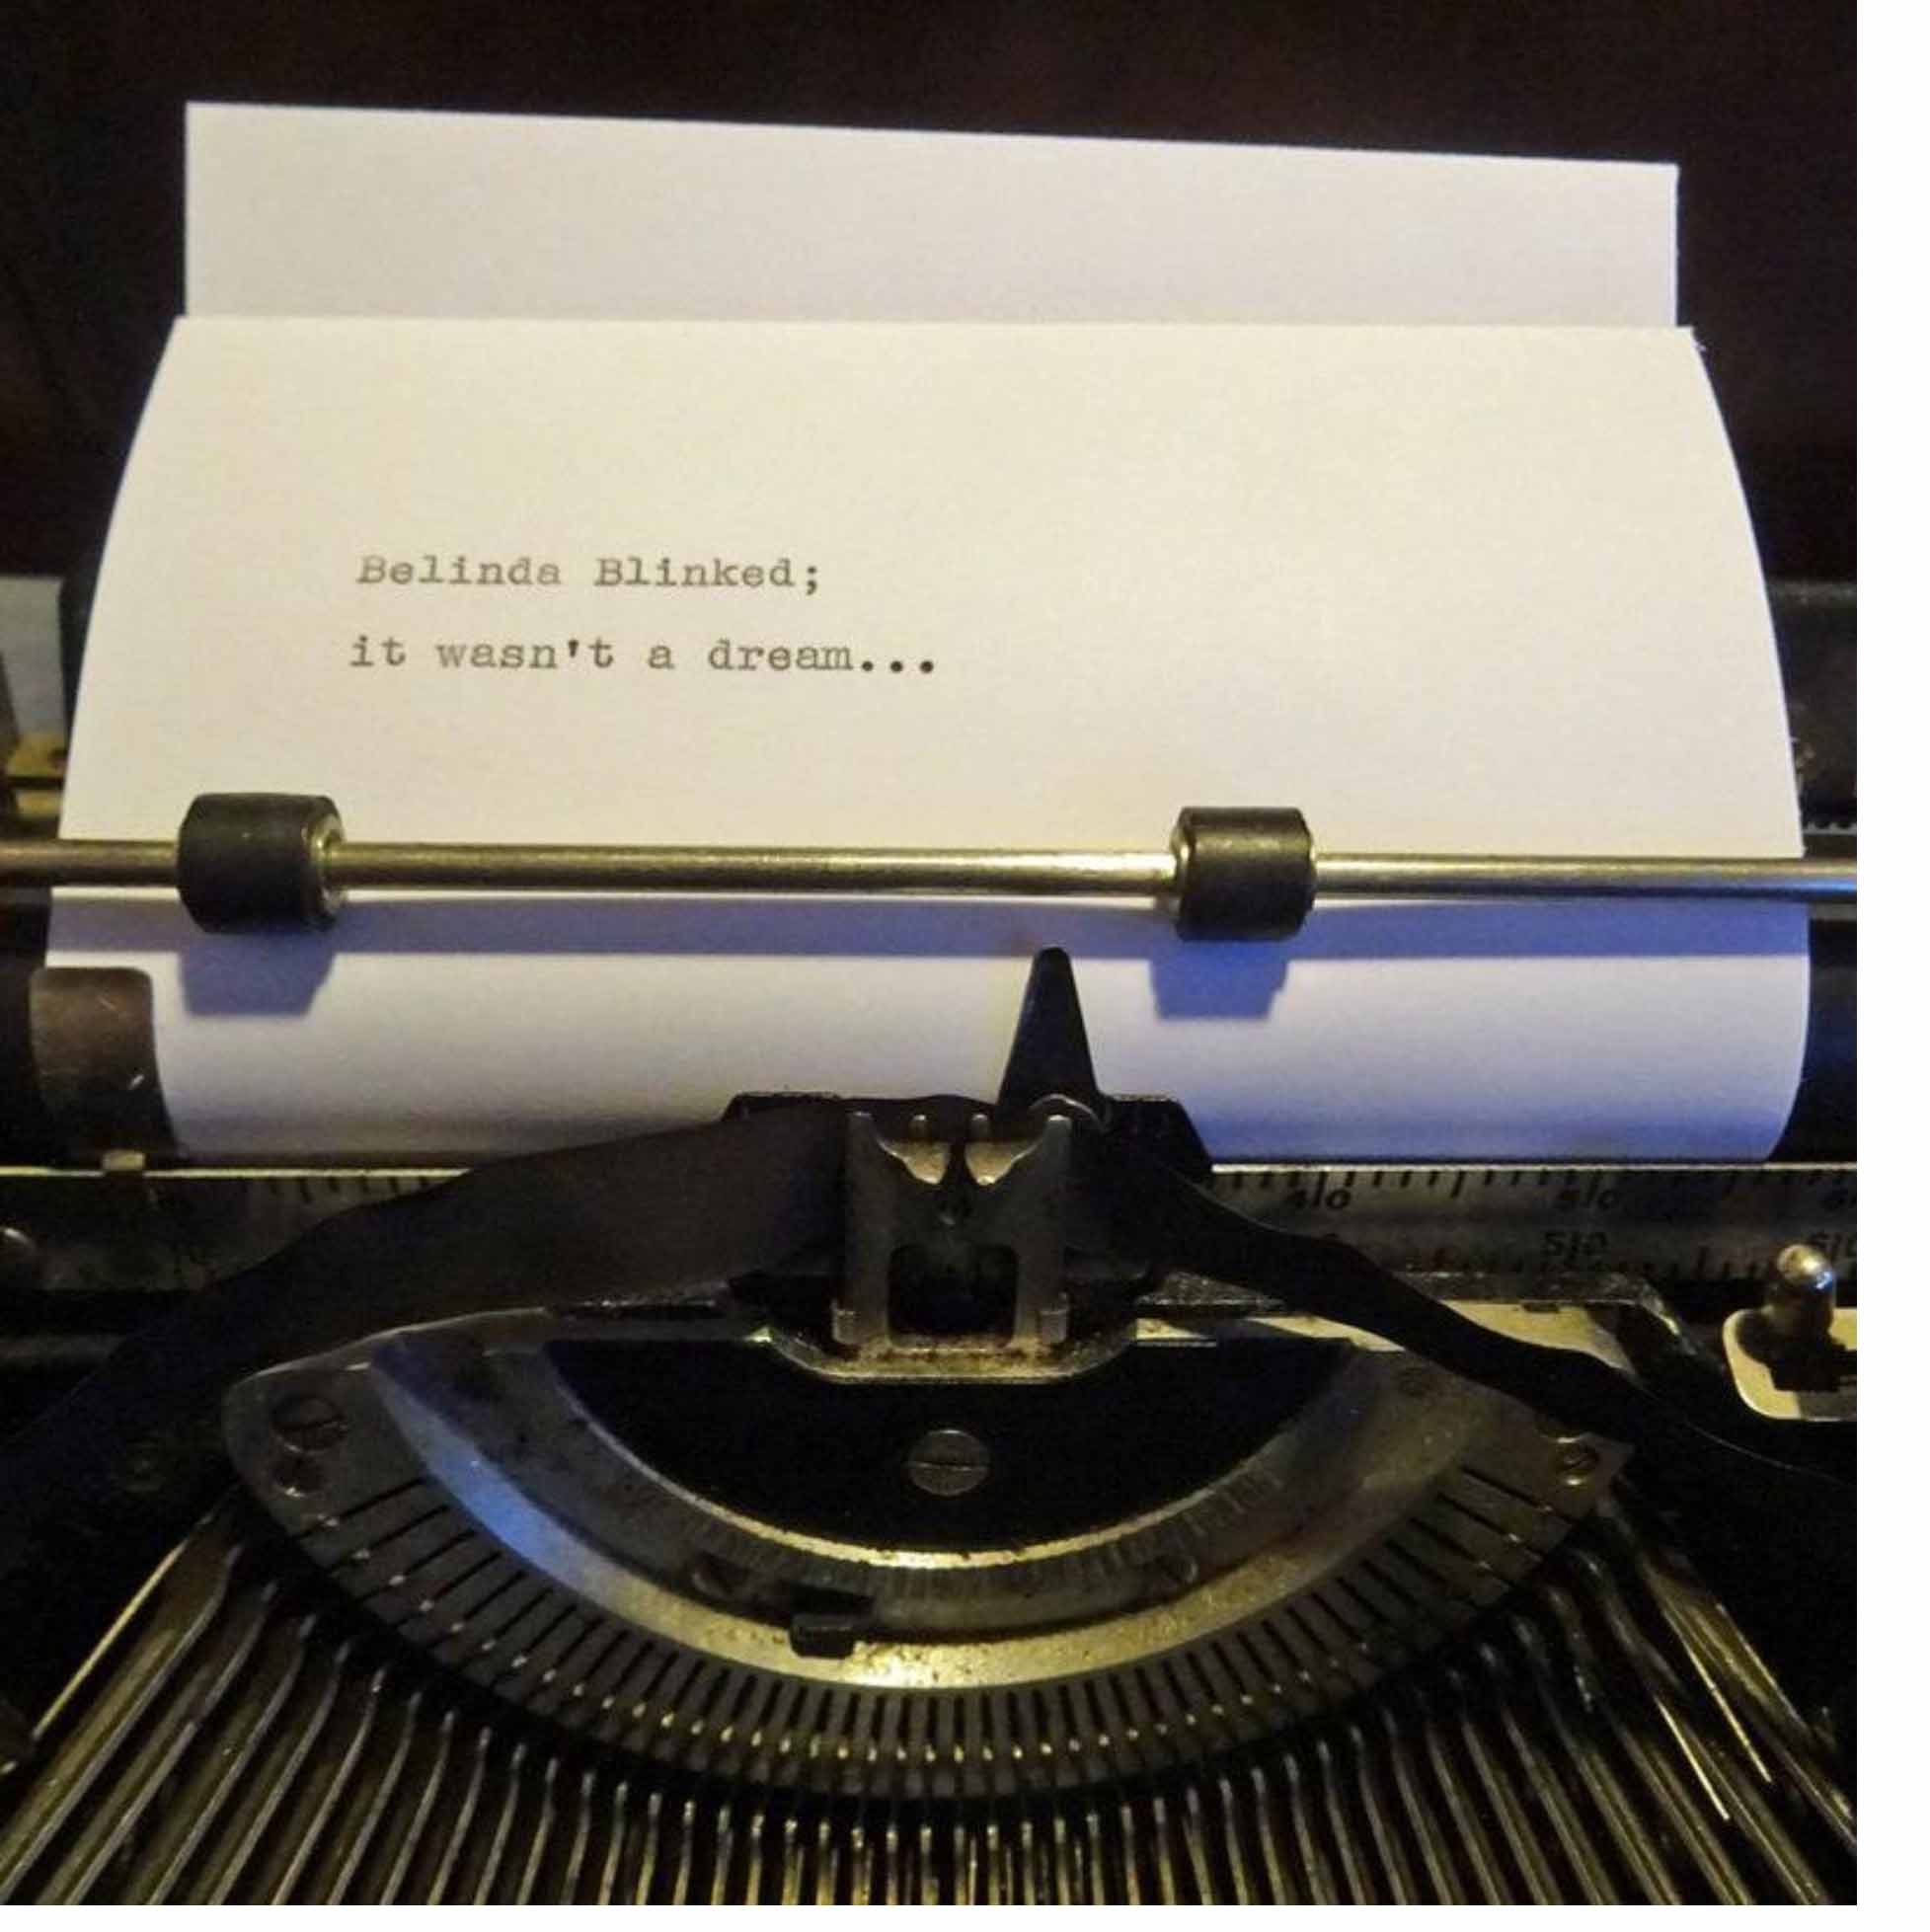 Rocky's Underwood Typewriter Belinda Blinked it wasn't a dream message at Etsy